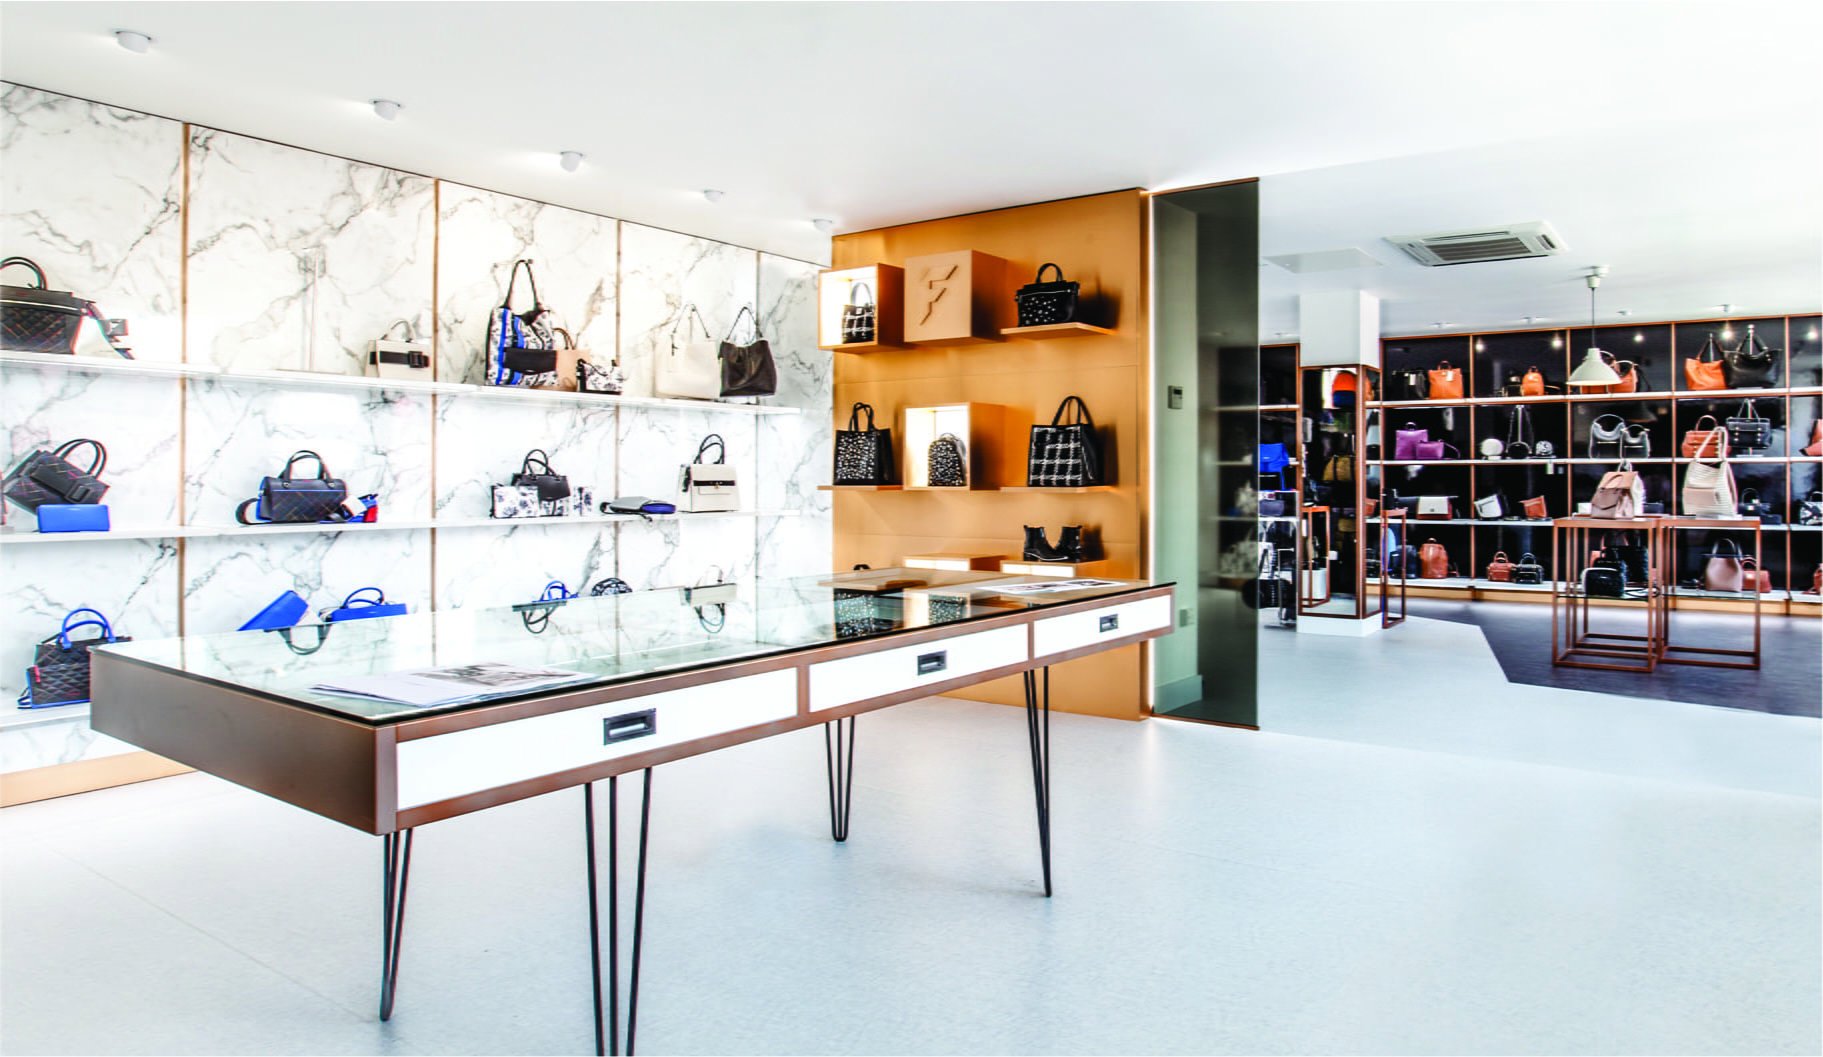 Fiorelli showroom with wall displays of handbags